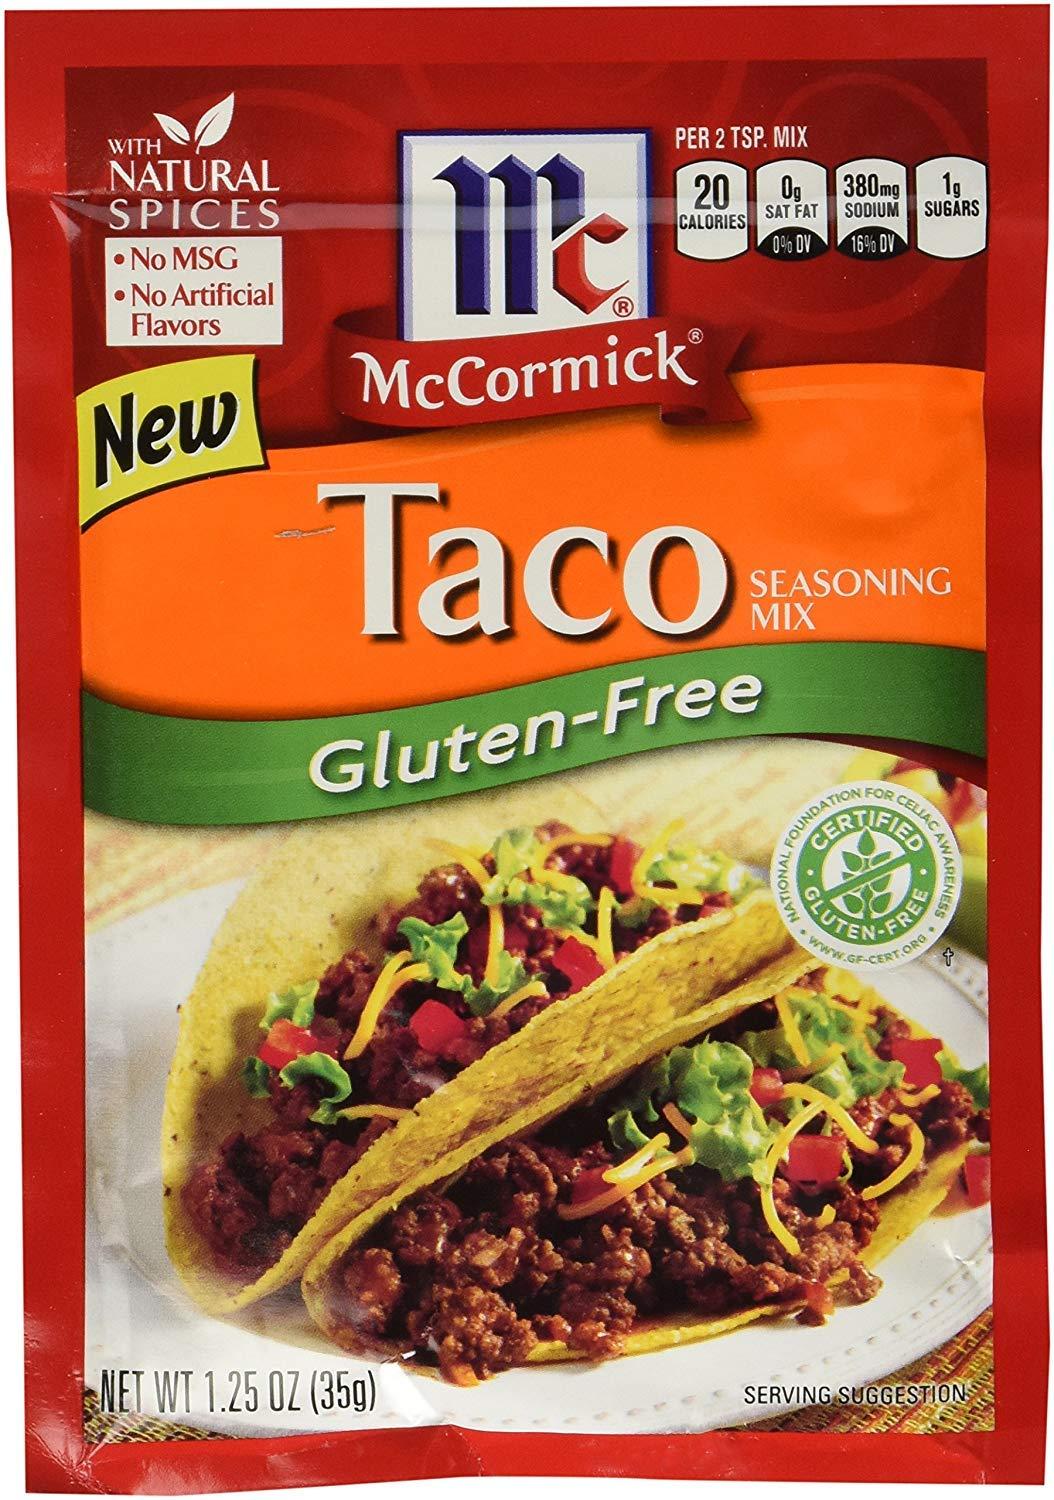 Mccormick Seasoning Mix Glutenfree Taco 1.25oz Pack of 3